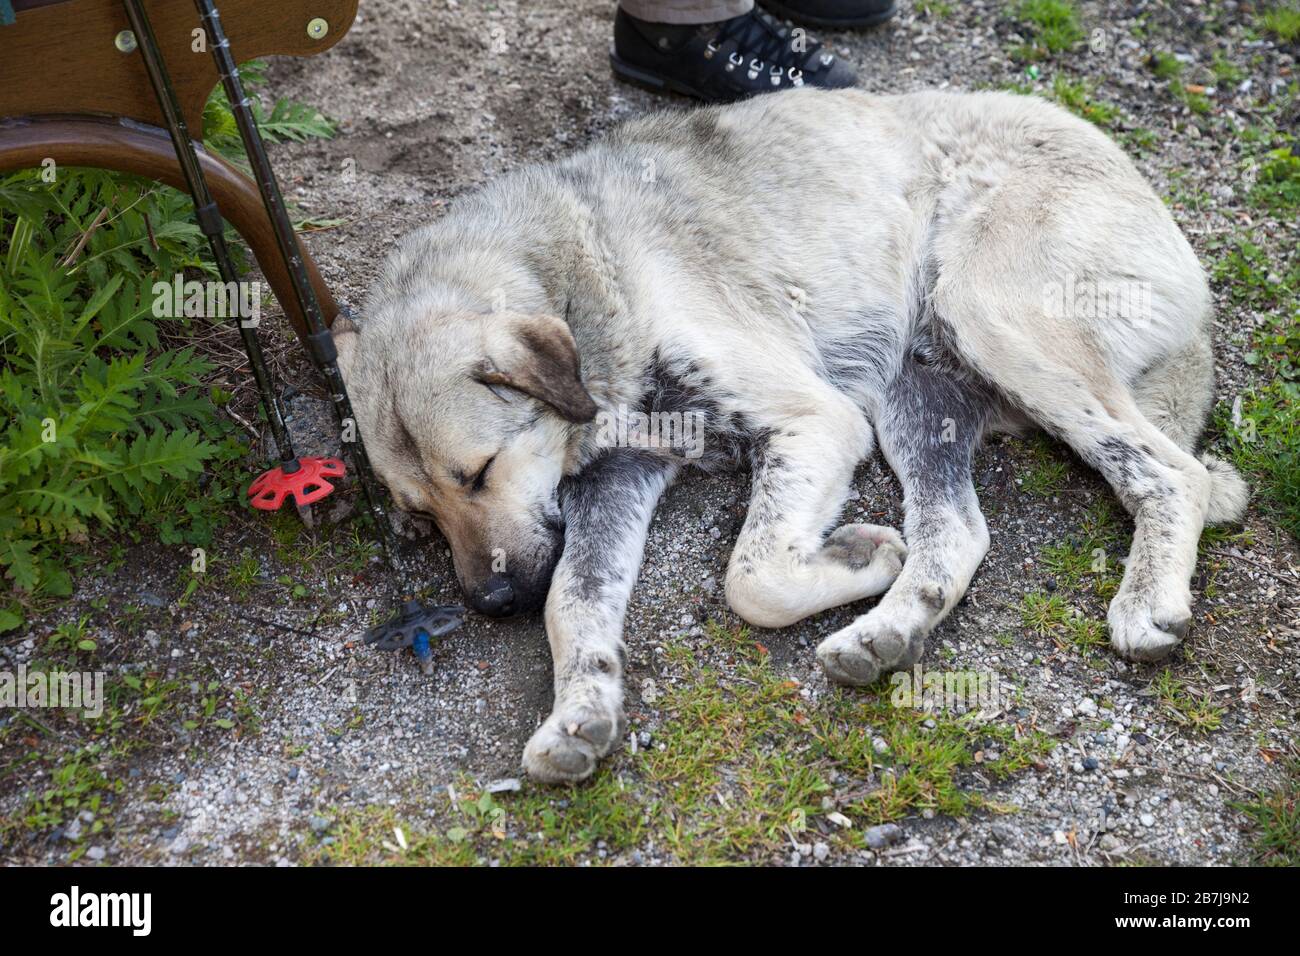 Dog sleeps on ground near trekking poles and wooden chair Stock Photo